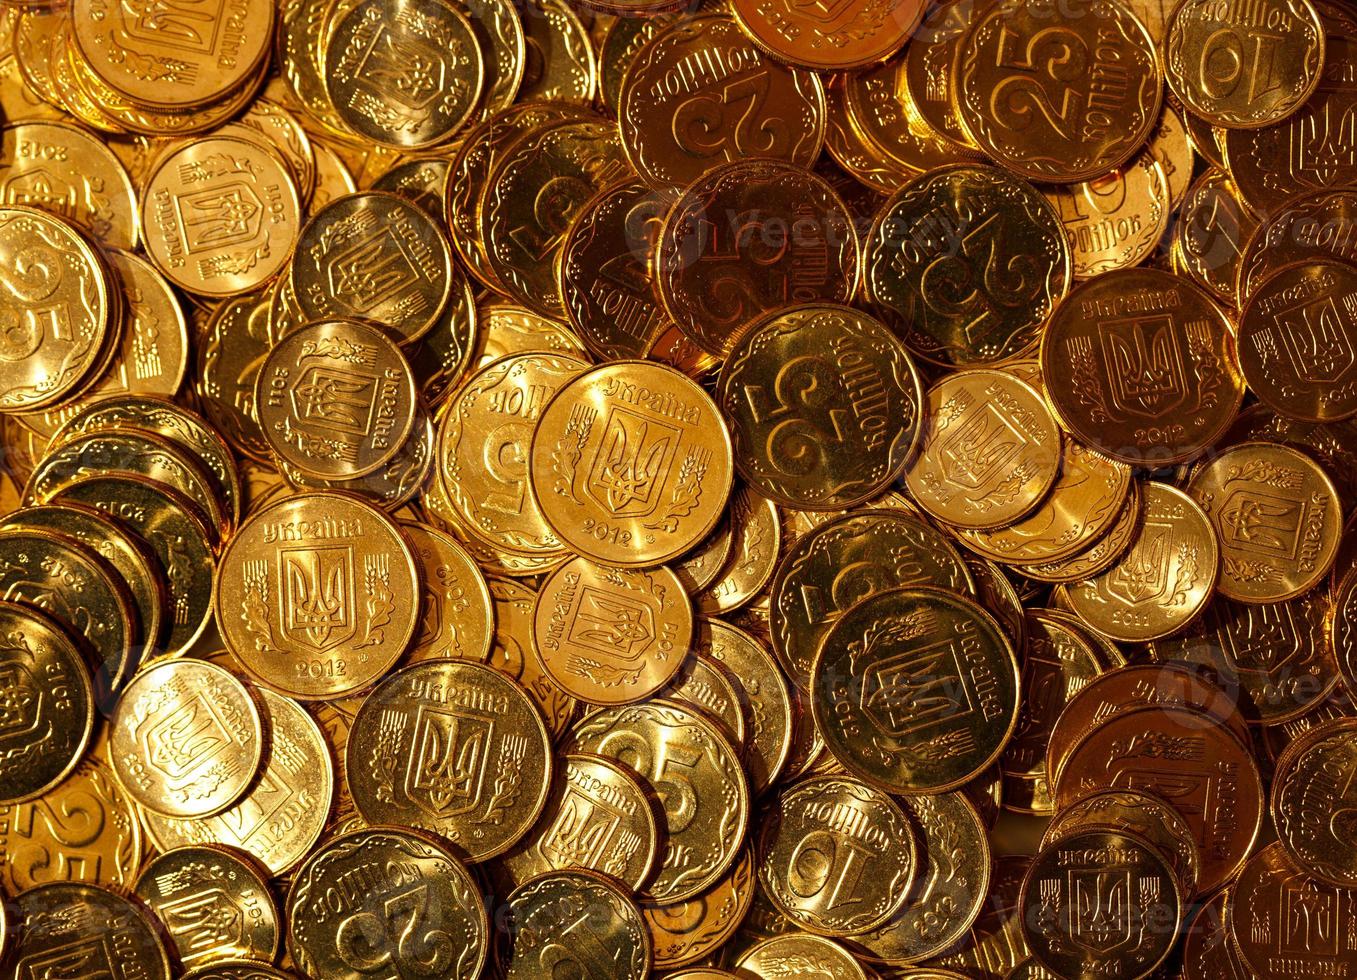 Golden coins of Ukraine photo